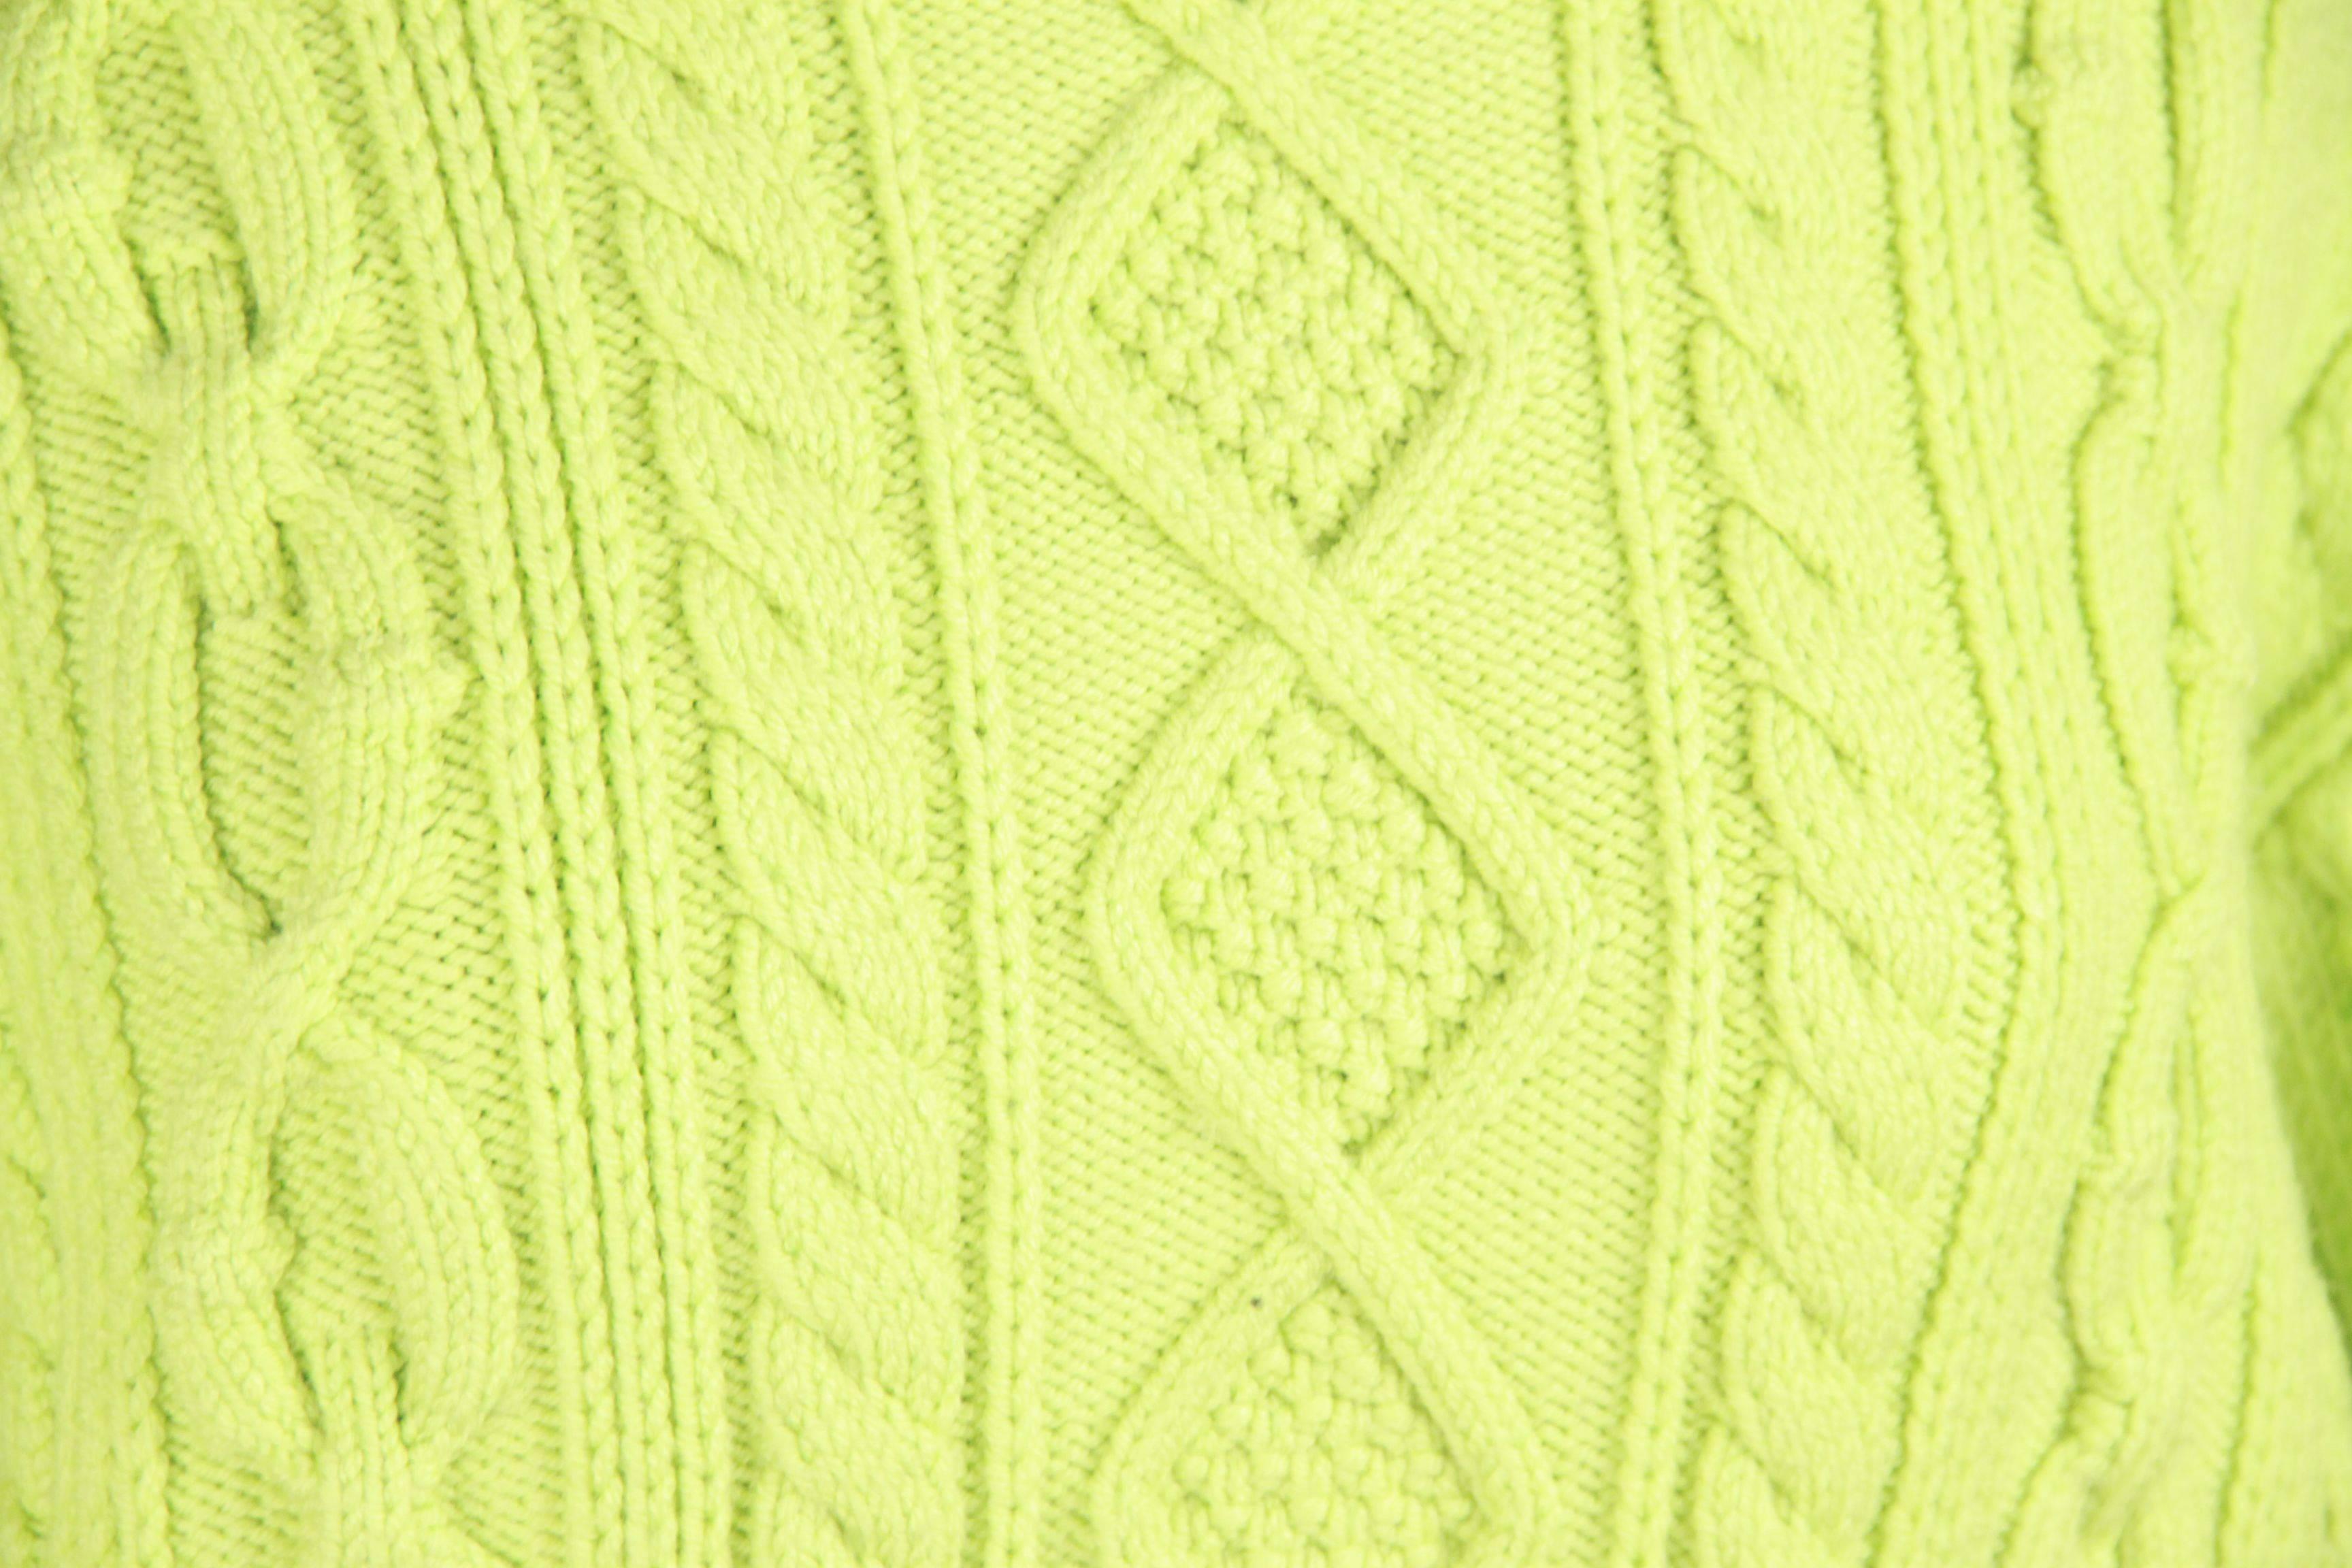 Women's LOUIS VUITTON Green Wool Blend  CROPPED SLEEVE JUMPER Size M